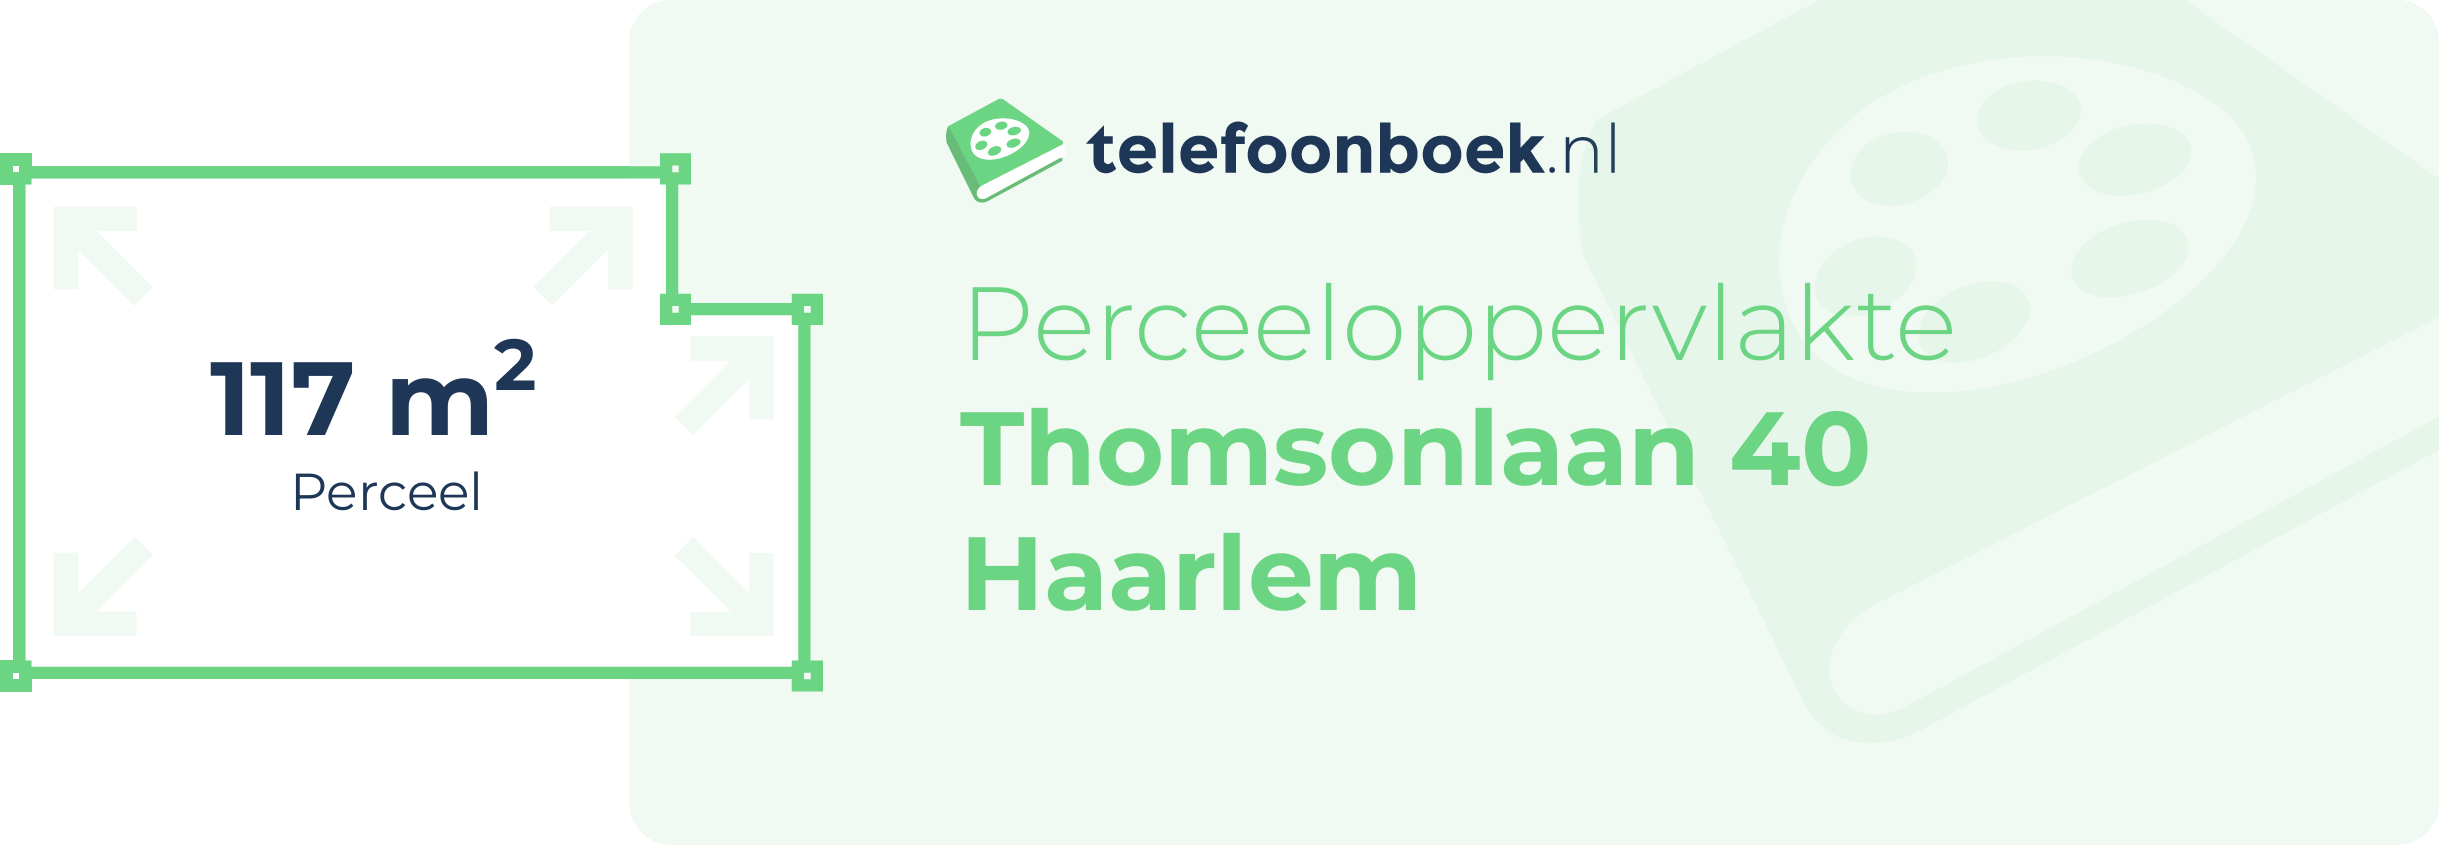 Perceeloppervlakte Thomsonlaan 40 Haarlem